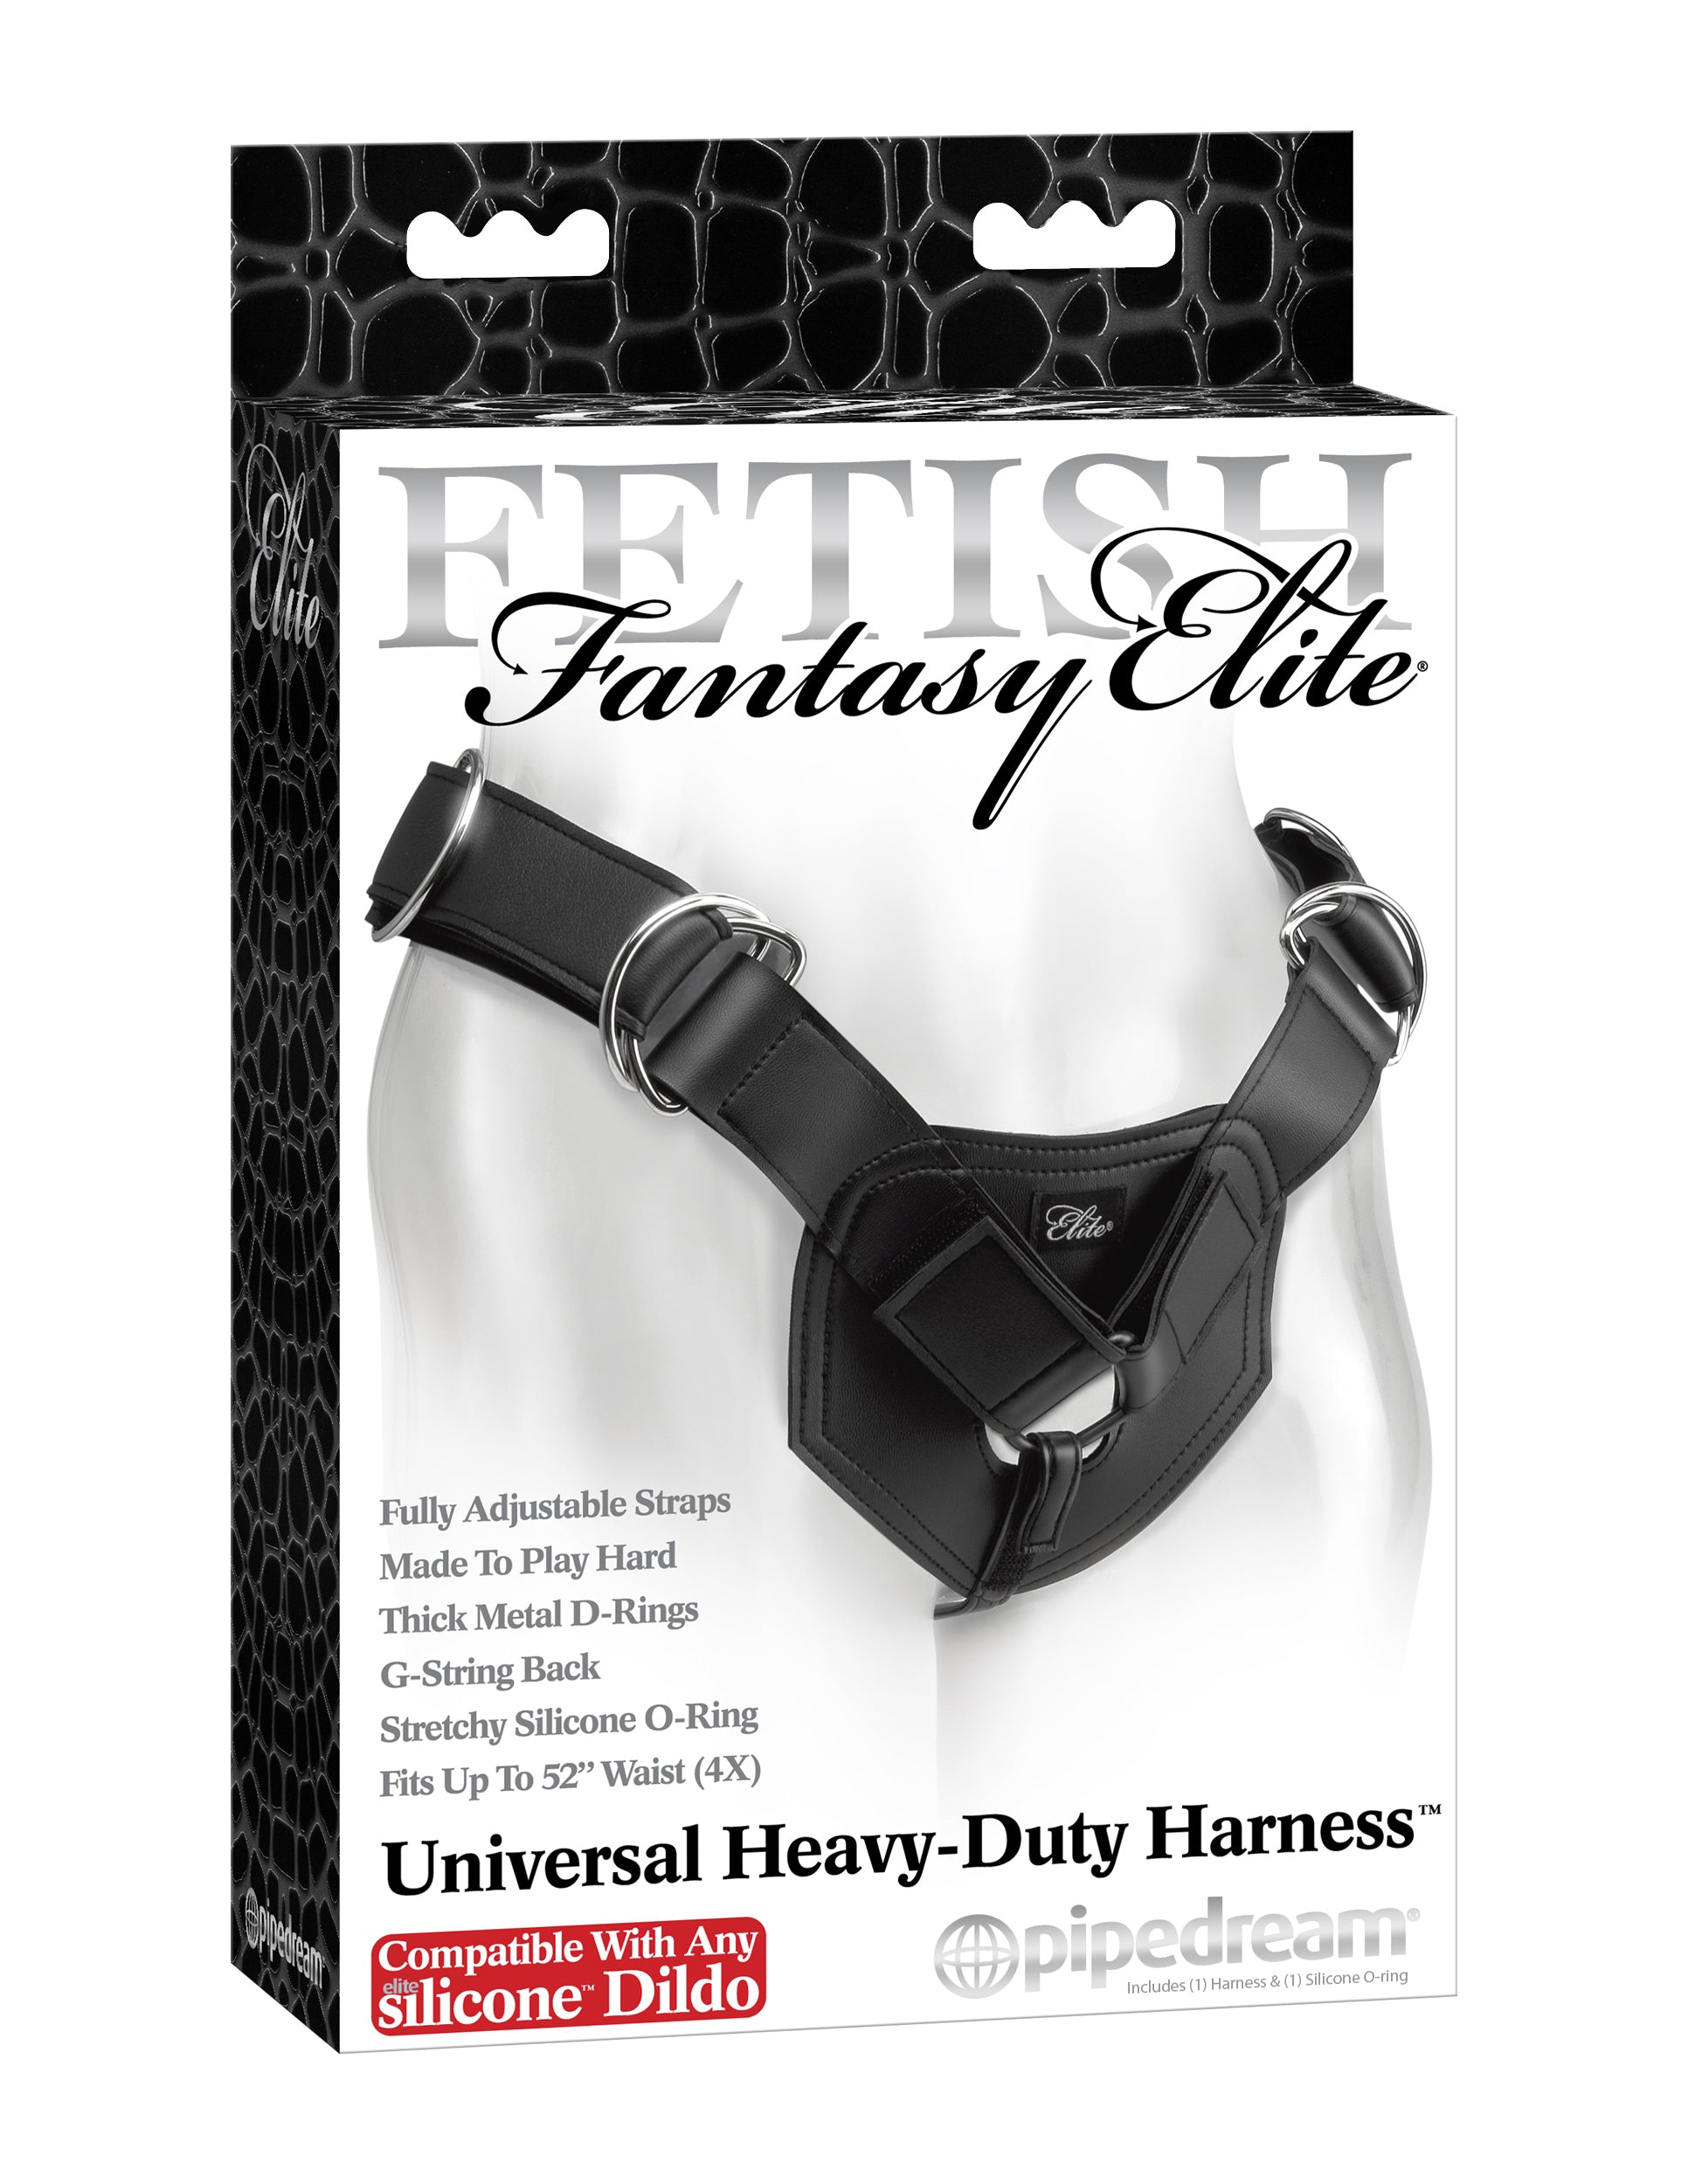 Fetish Fantasy Elite Universal Heavy Duty Harness - Black PD4561-23